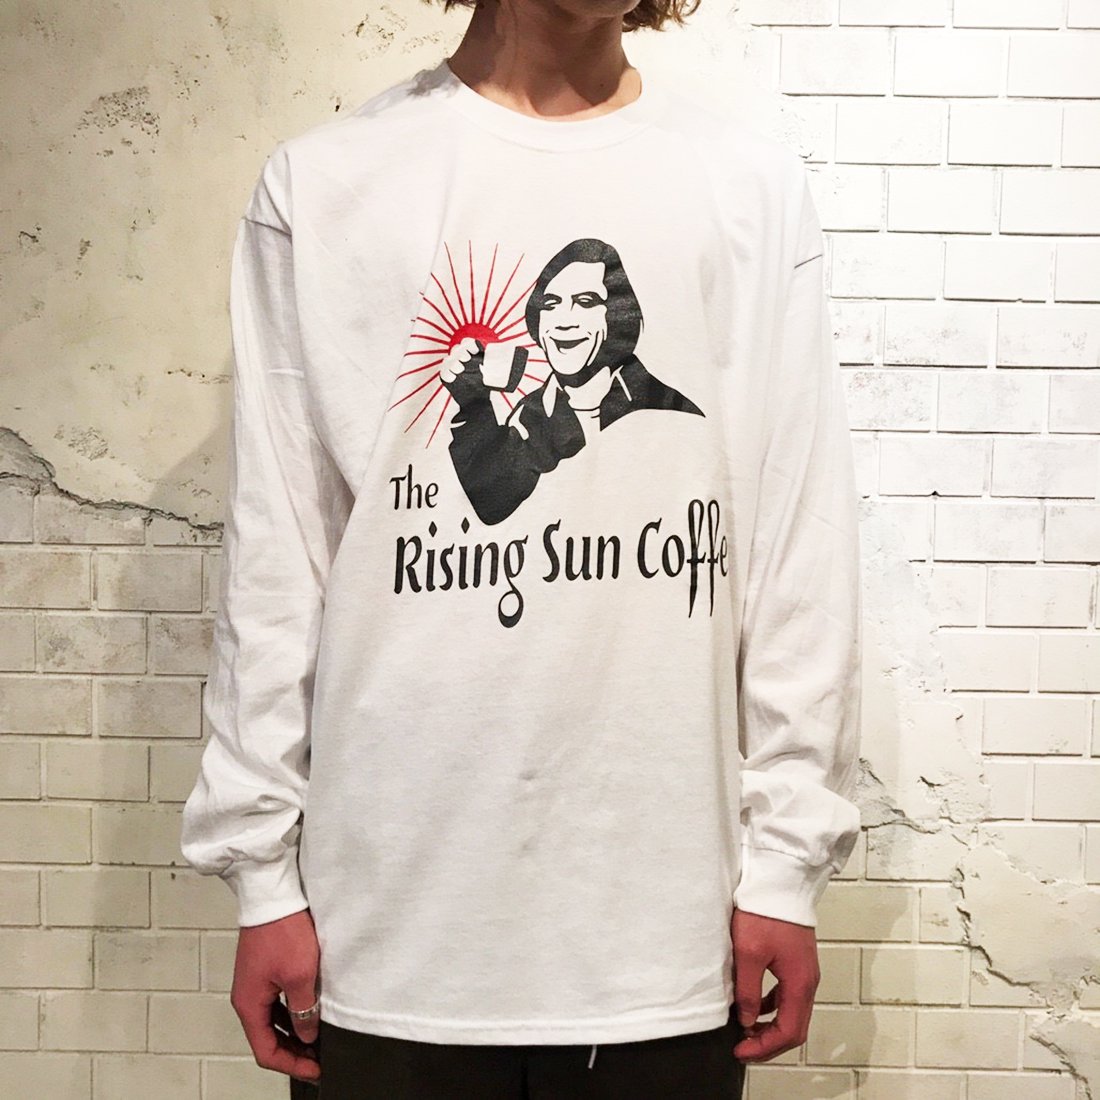 captains helm × rising sun coffee Tシャツ